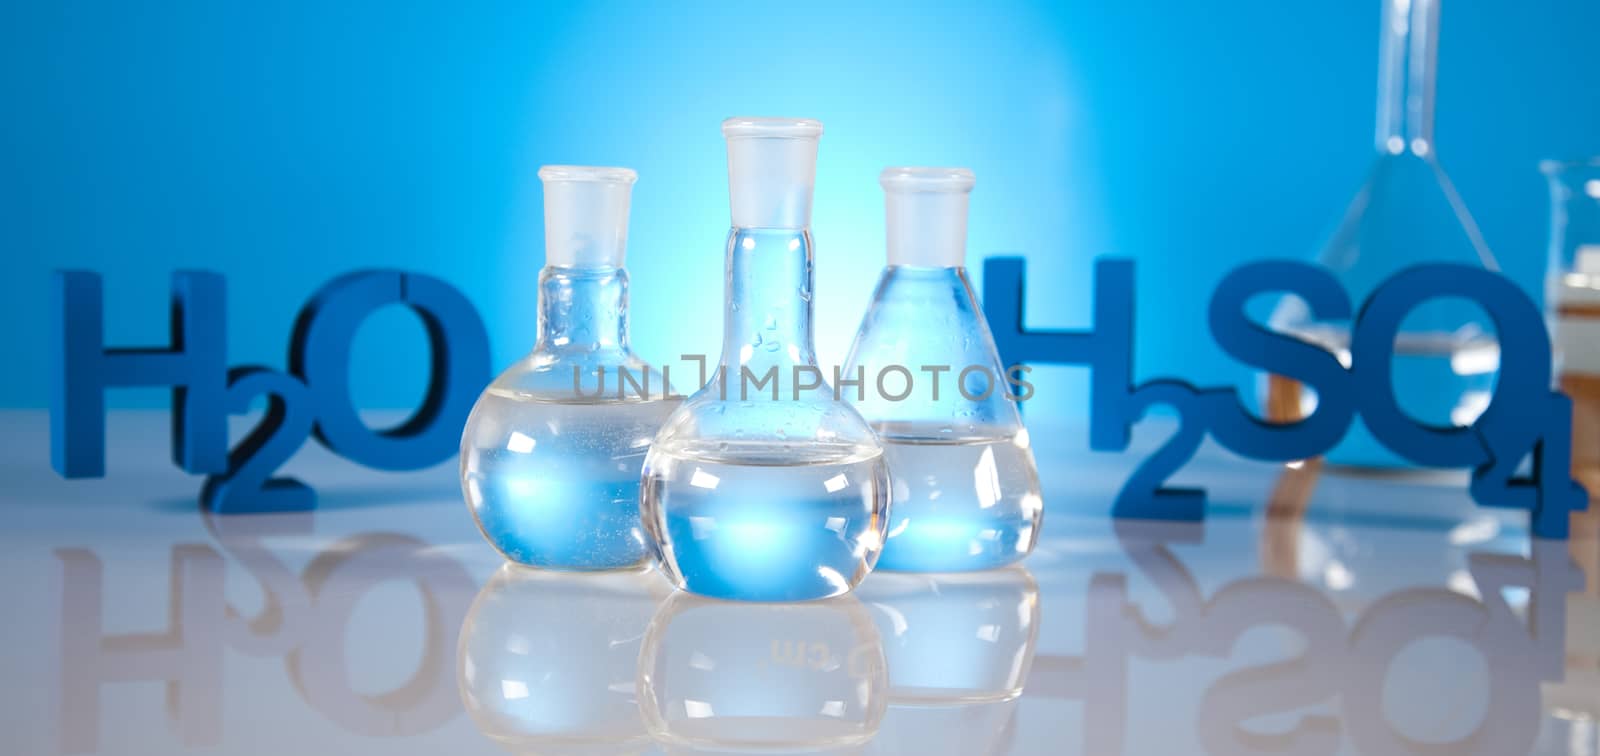 DNA molecules, atom, Laboratory glassware